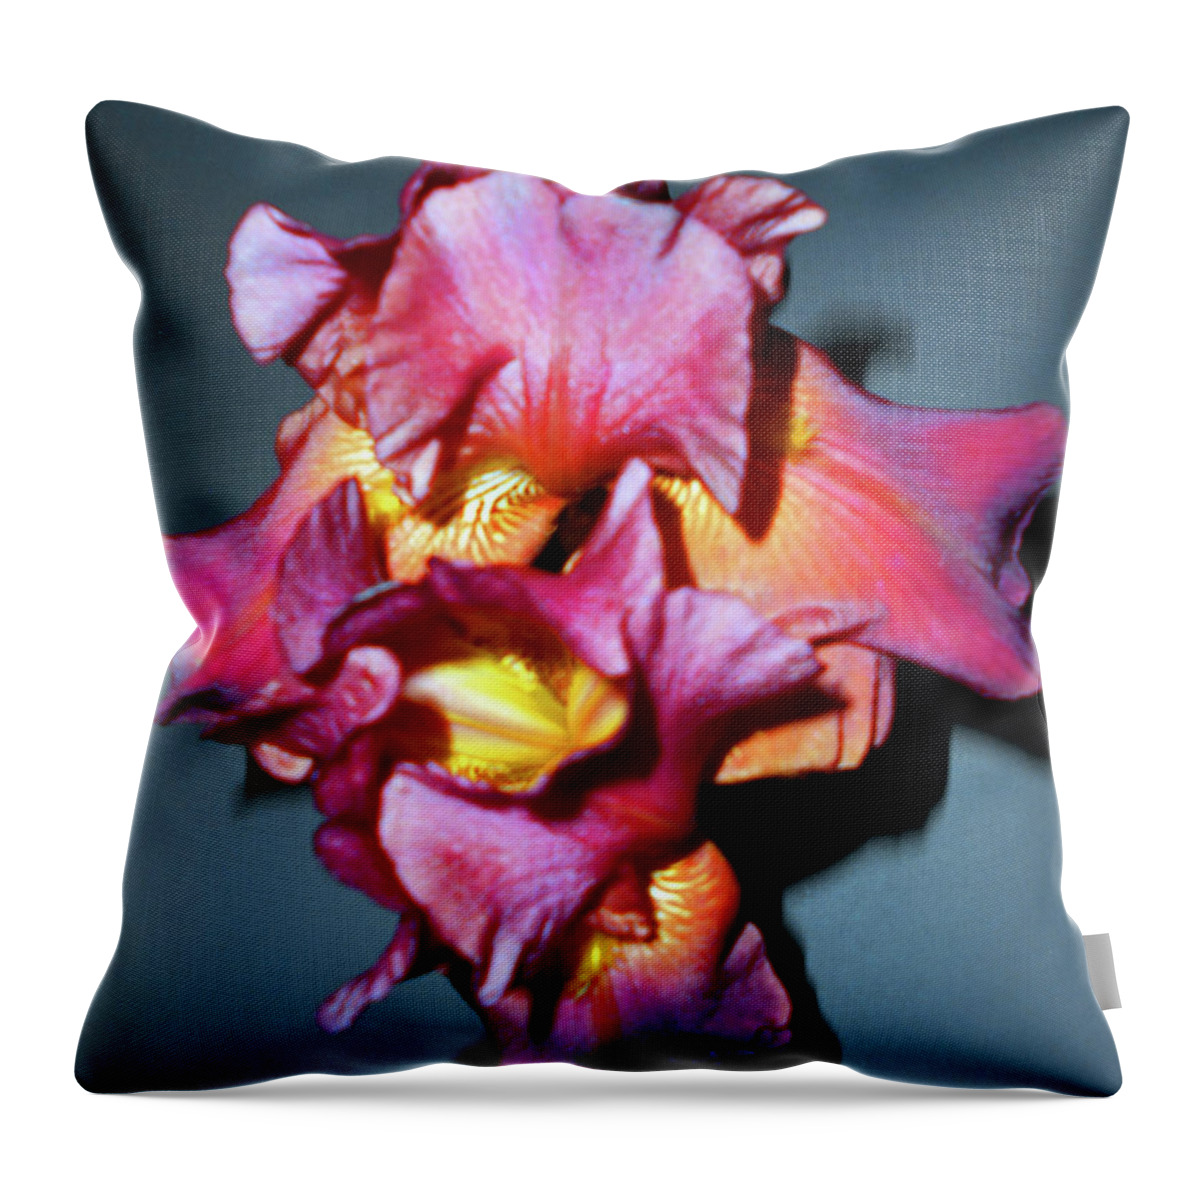 Iris Throw Pillow featuring the photograph Autumn Iris 5 by Ron Kandt